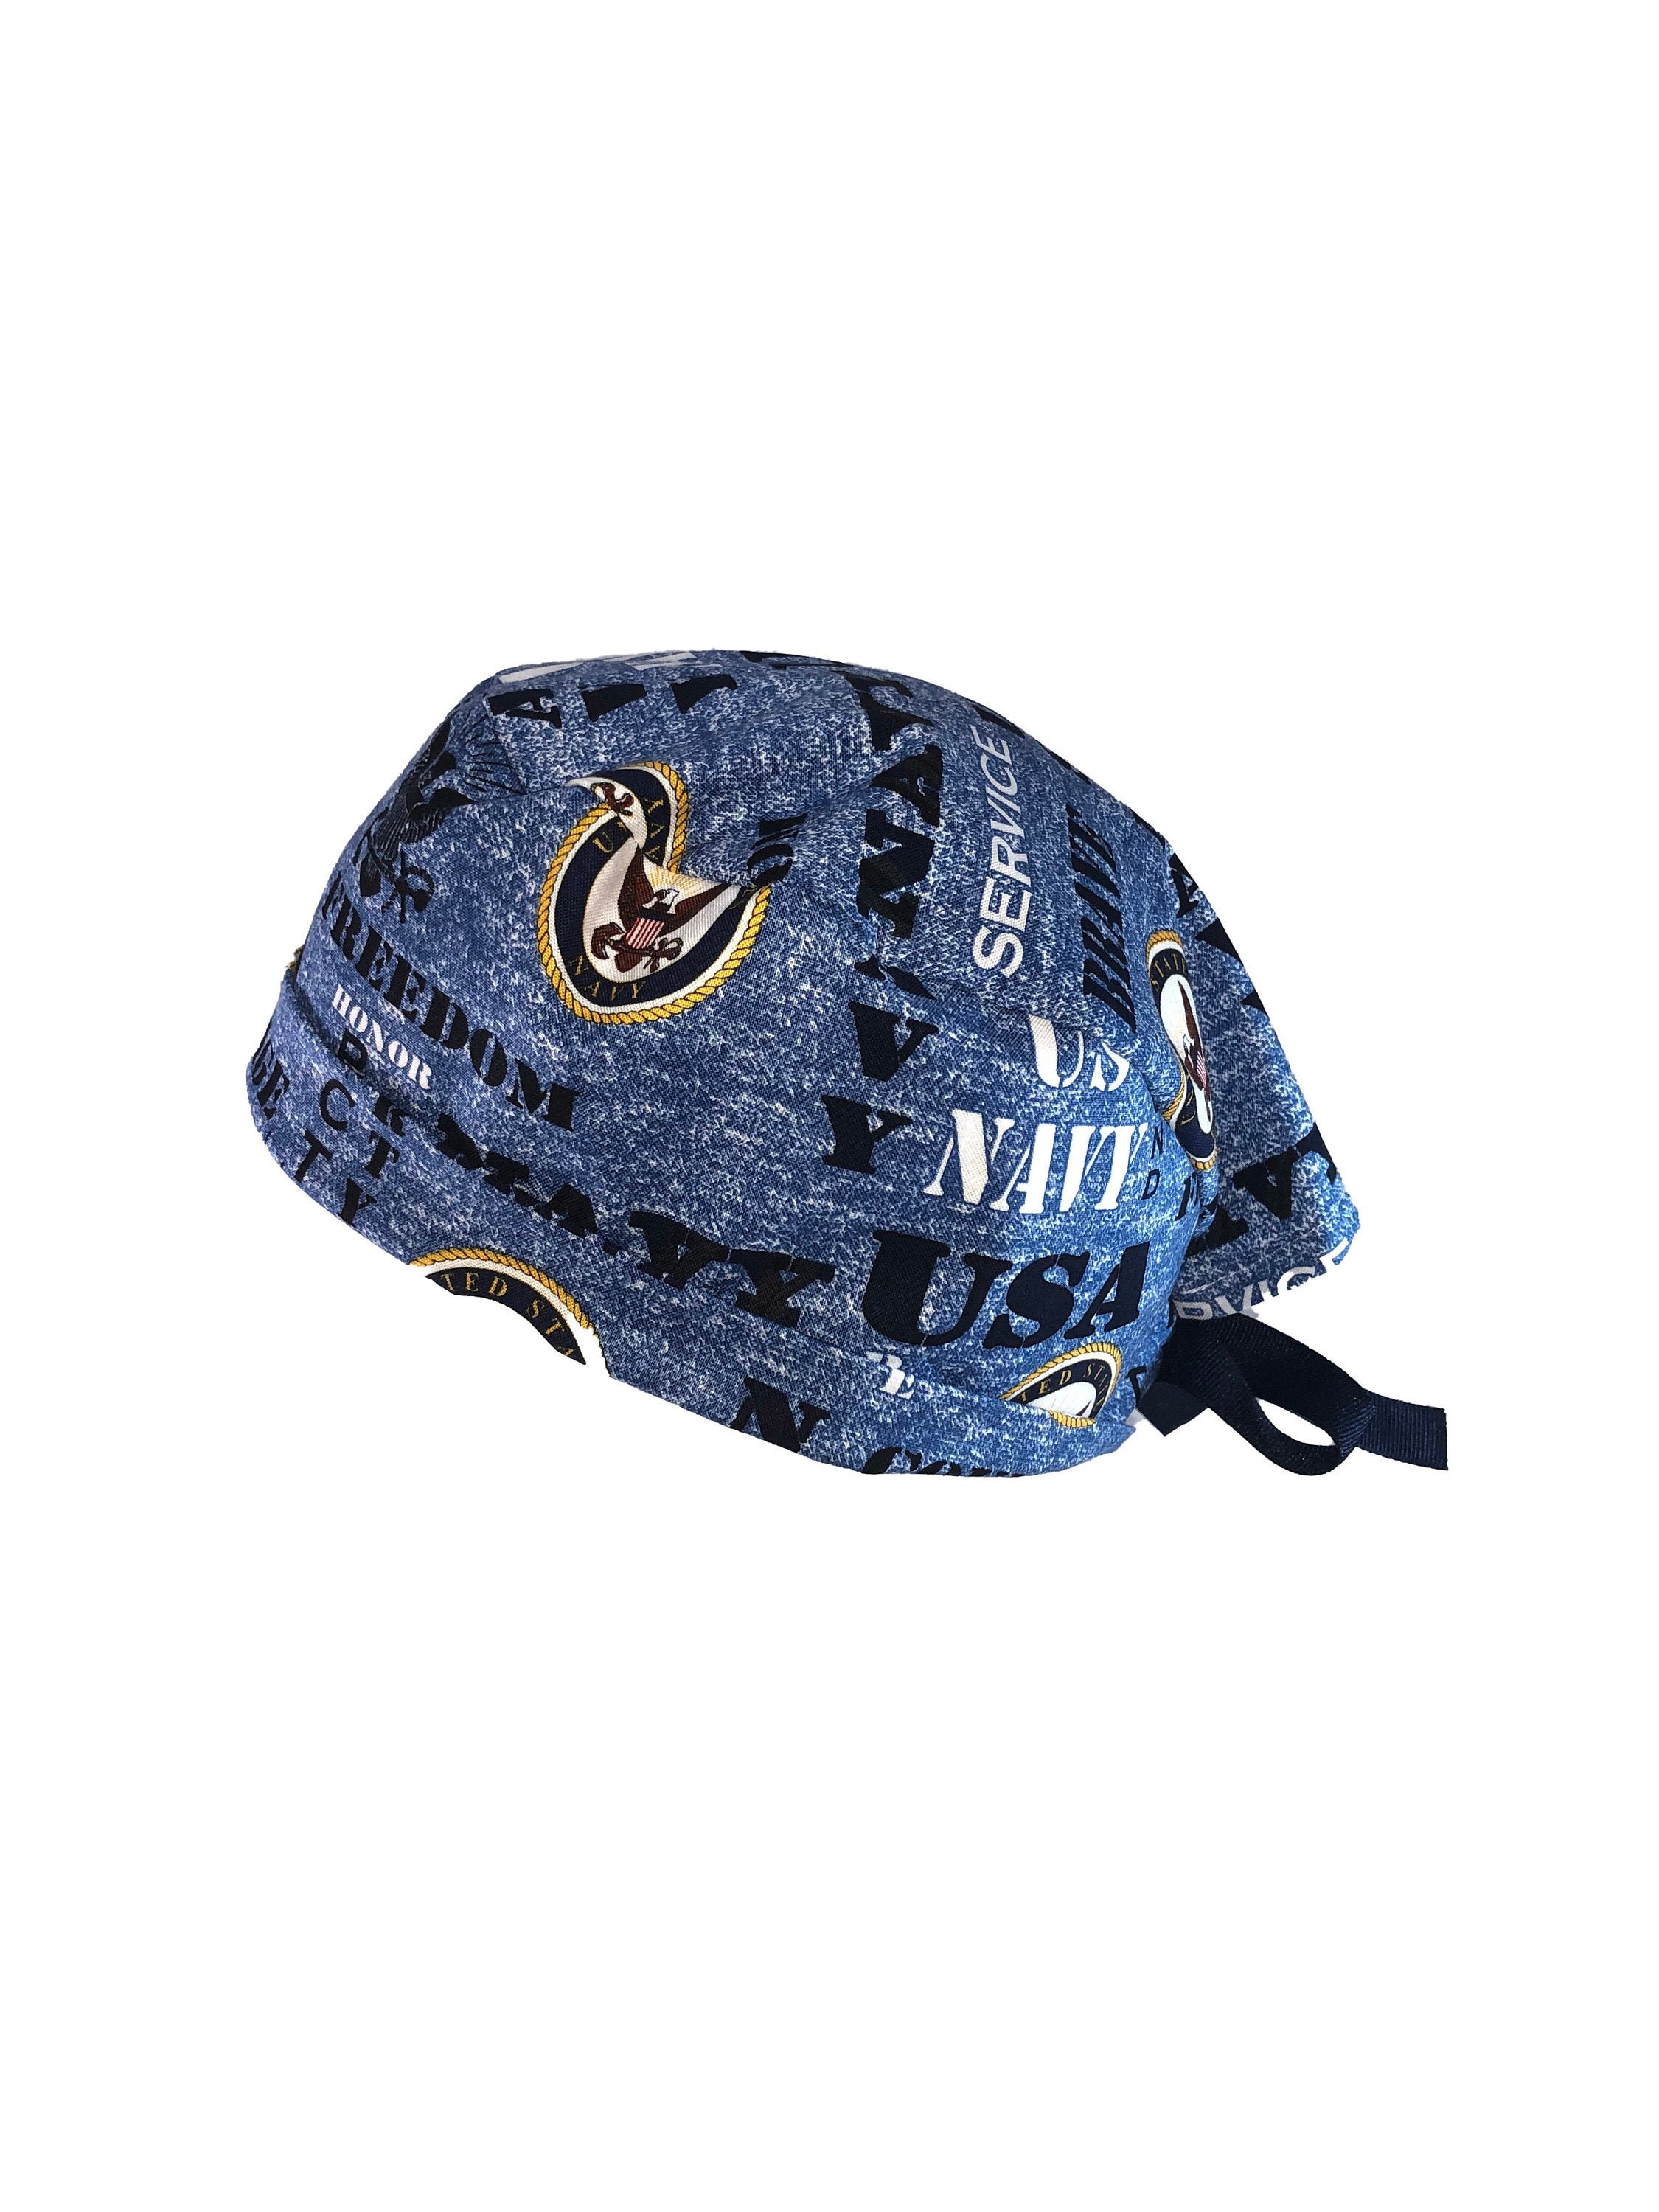 Girldad® Navy/Navy Embroidered Trucker Hat - Fynnleigh Mae & Co